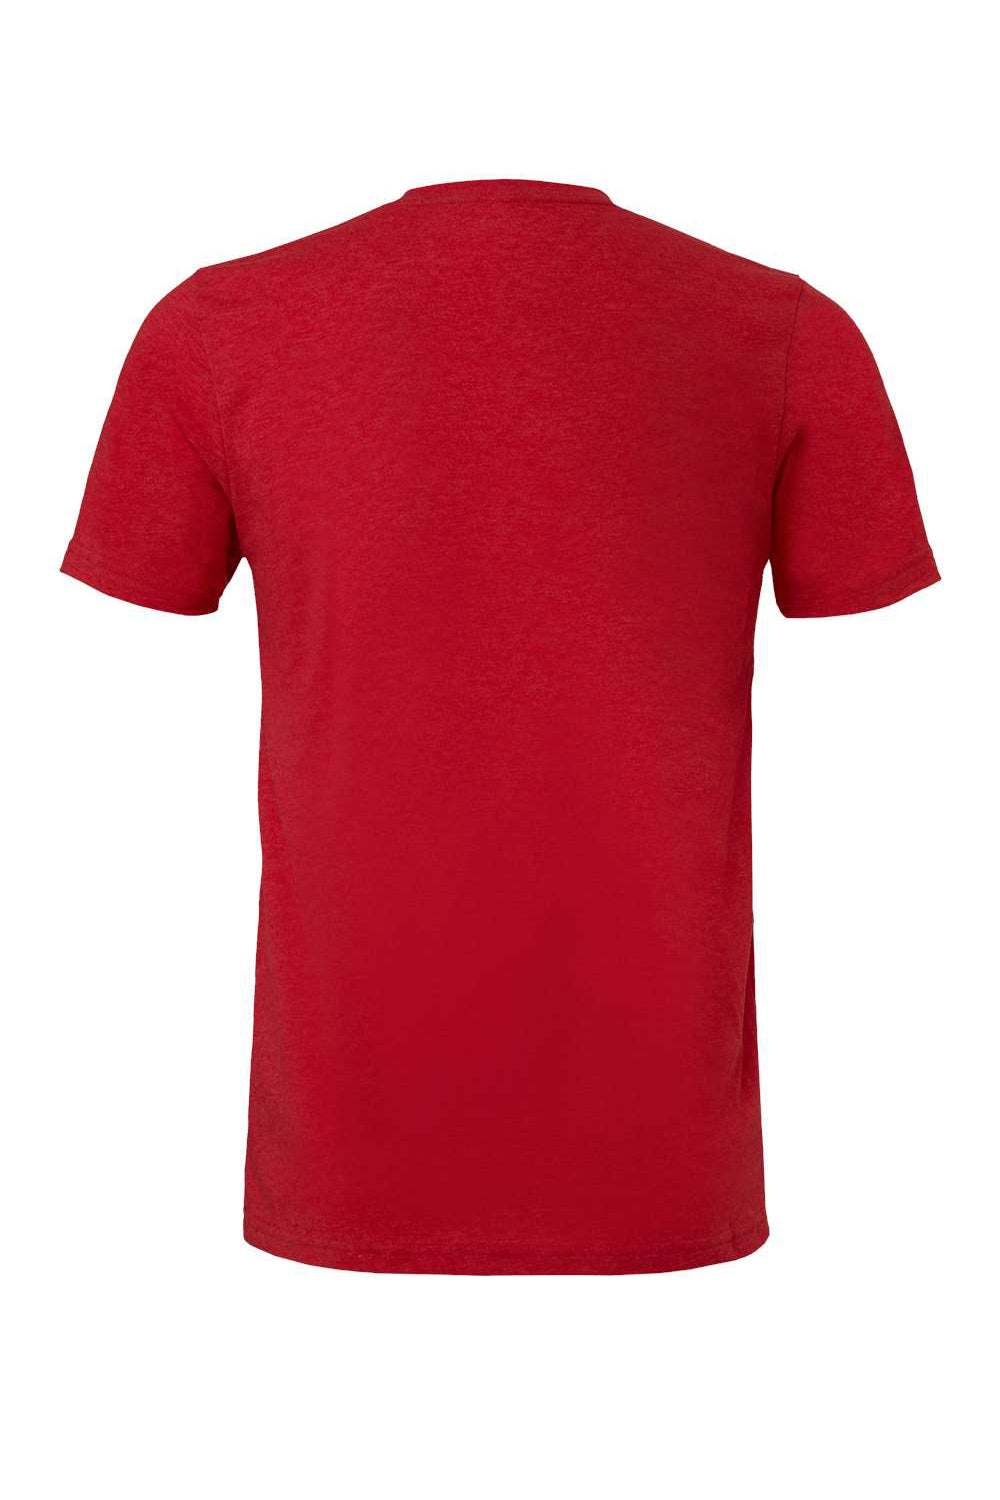 Bella + Canvas BC3413/3413C/3413 Mens Short Sleeve Crewneck T-Shirt Solid Red Flat Back